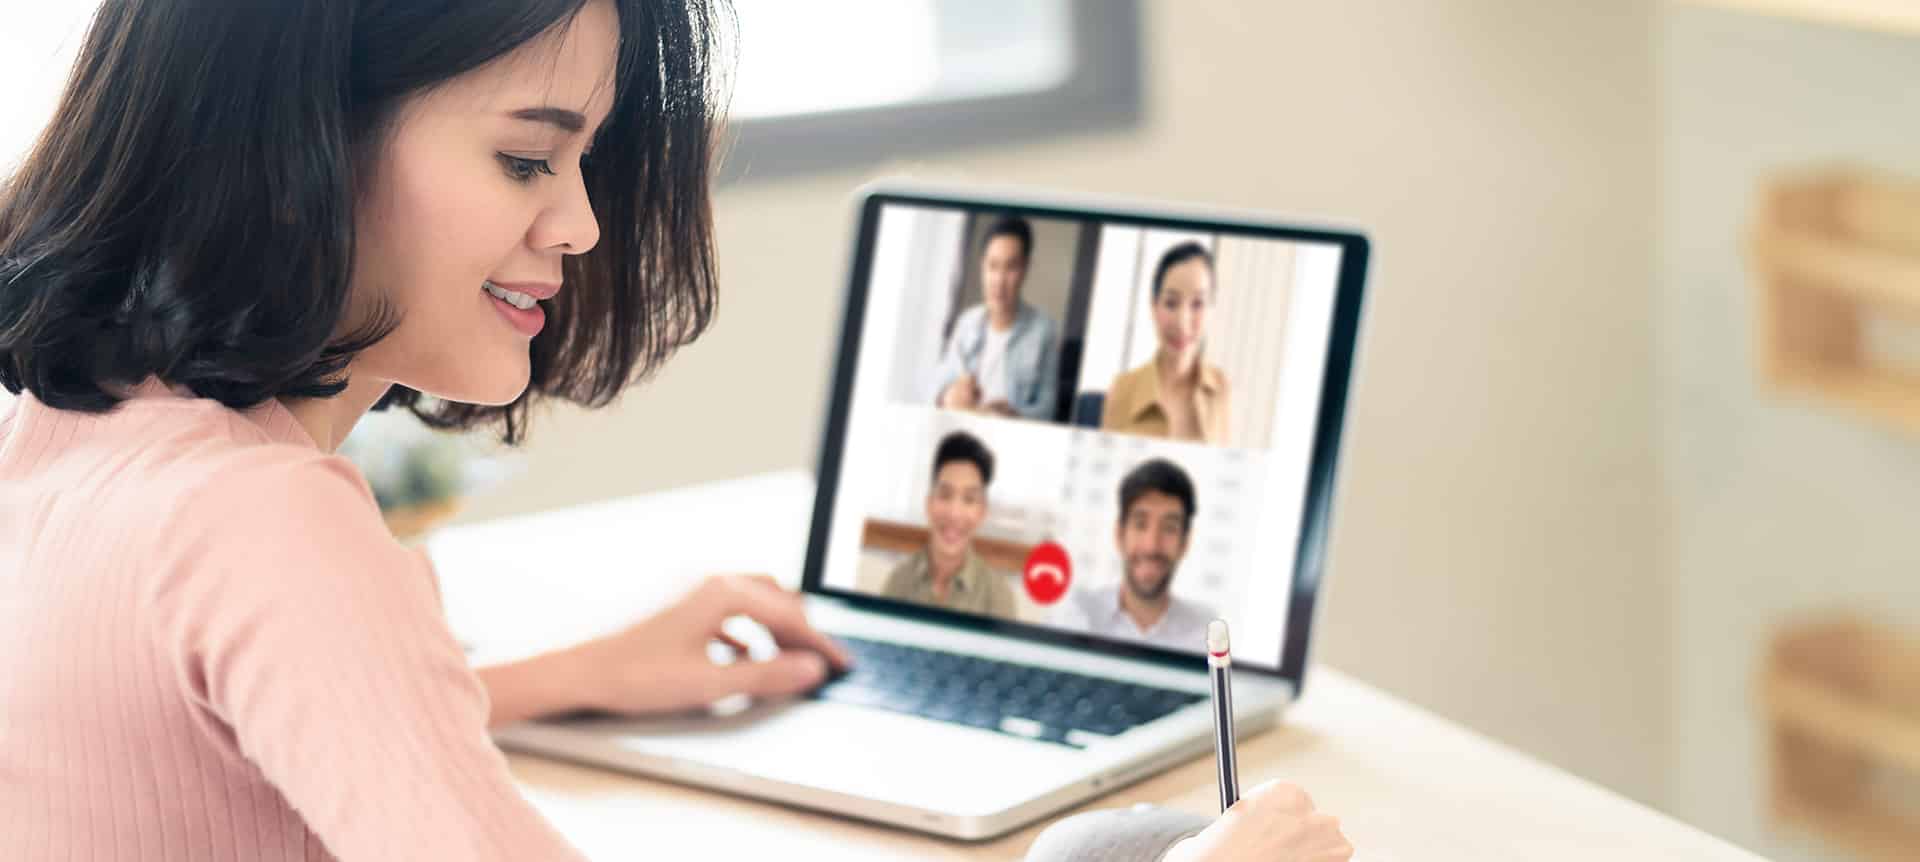 video assessment interviews viewed on a laptop